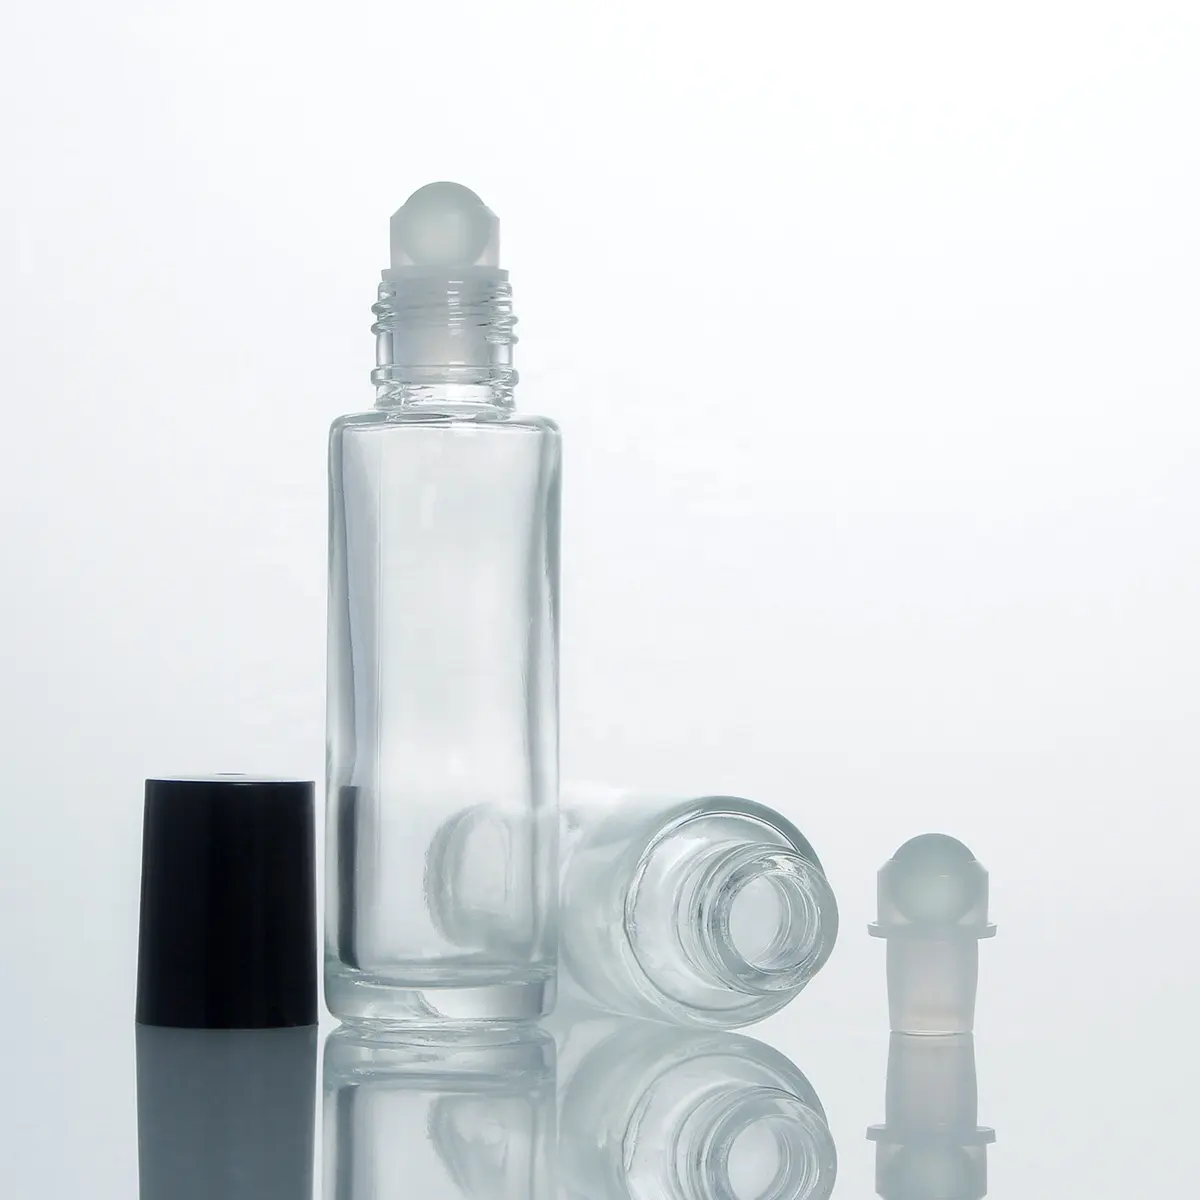 थोक 10ml स्पष्ट एम्बर ग्लास Rollette शरीर लोशन इत्र आवश्यक तेल की बोतल के साथ रोलर इकाई टोपी